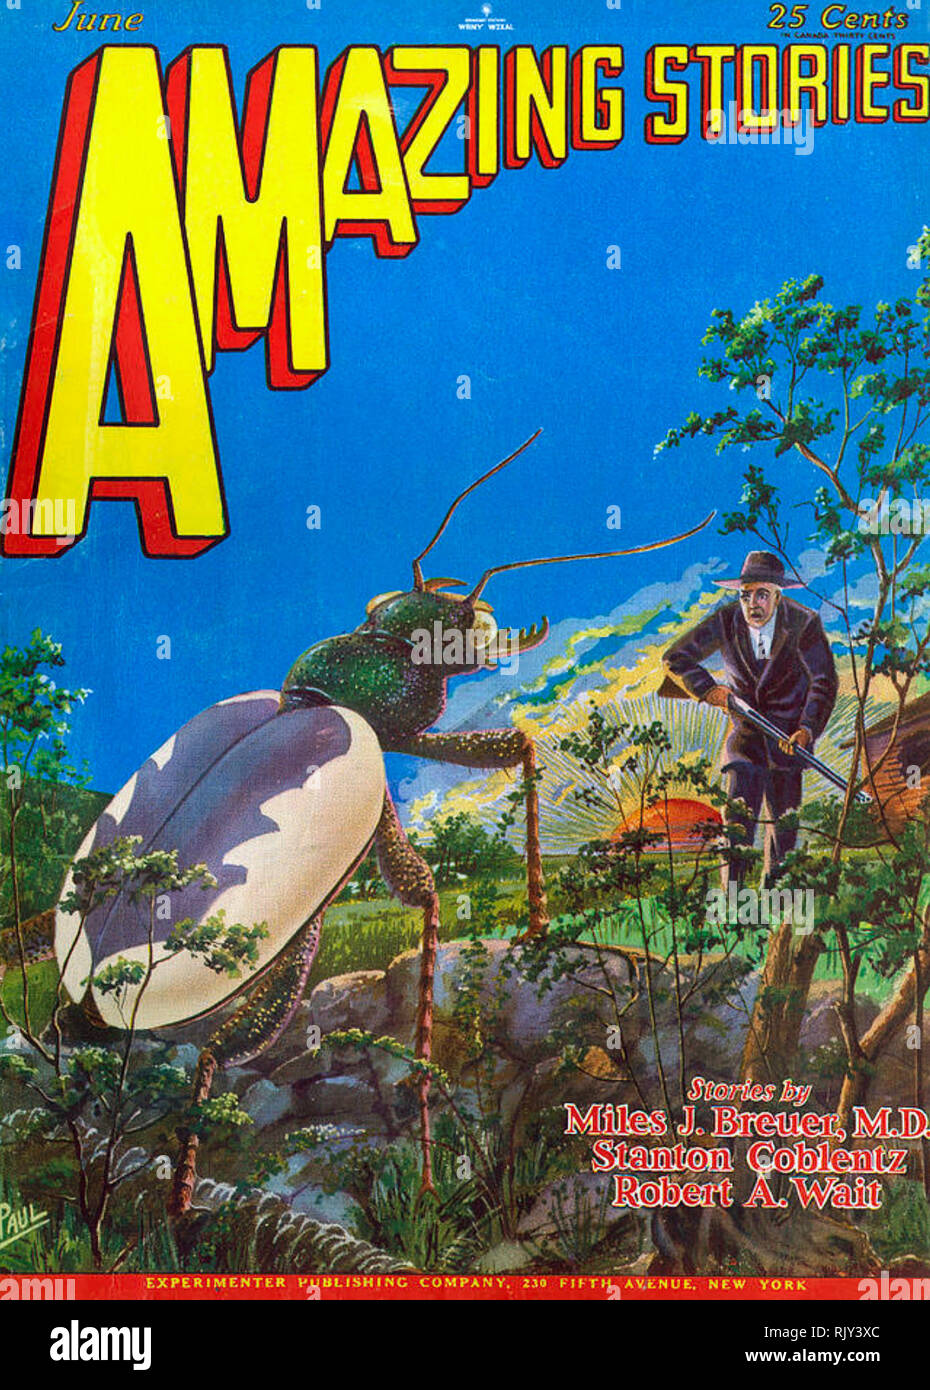 AMAZING STORIES American science fiction magazine Stock Photo